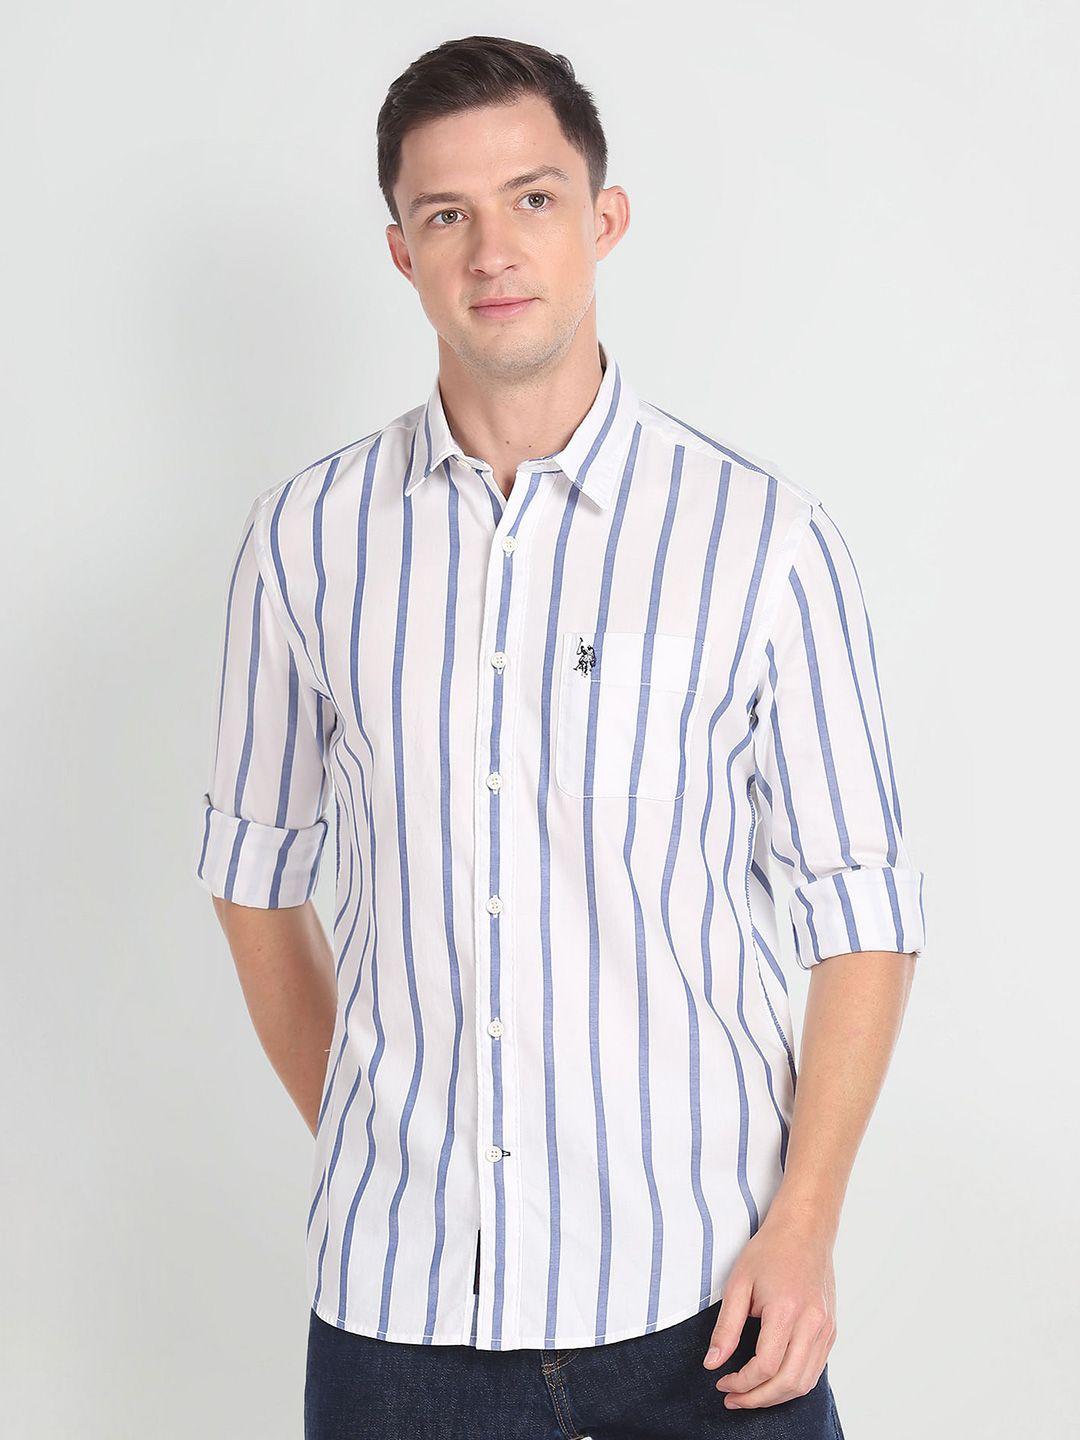 u.s. polo assn. denim co. vertical striped slim fit pure cotton casual shirt